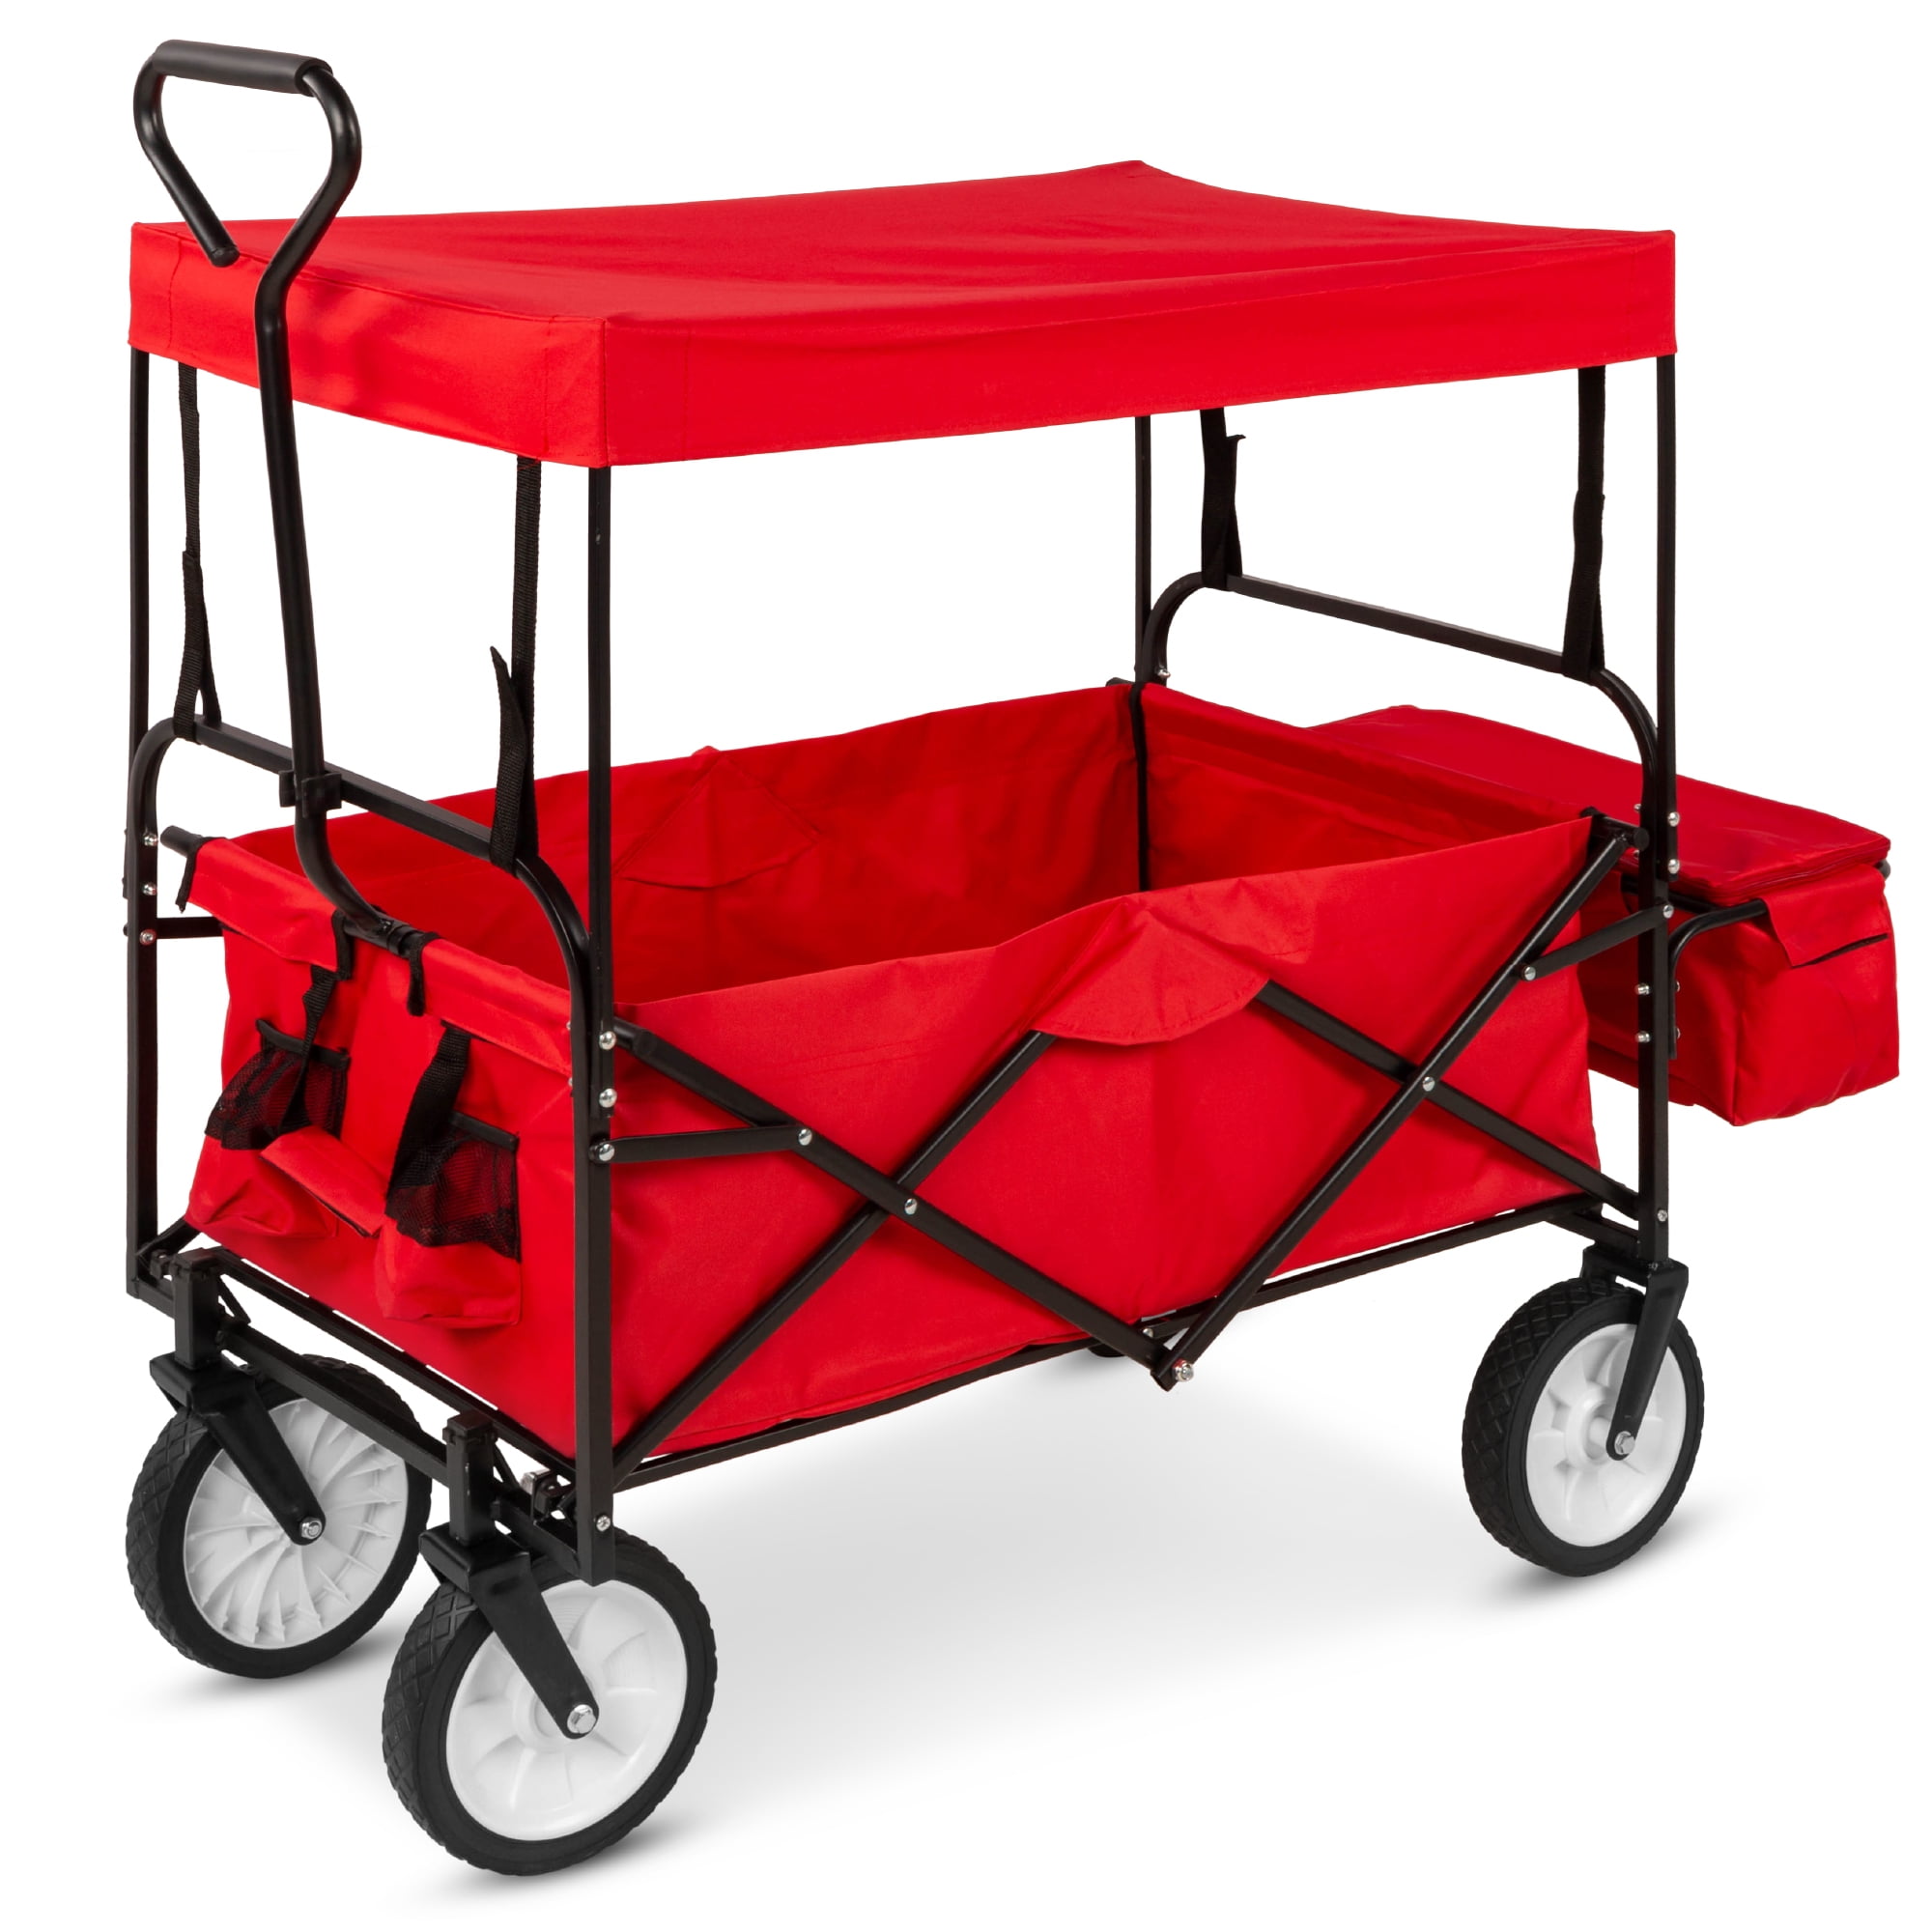 Portable Color Red Folding Wagon Garden Beach Utility Cart with Canopy 